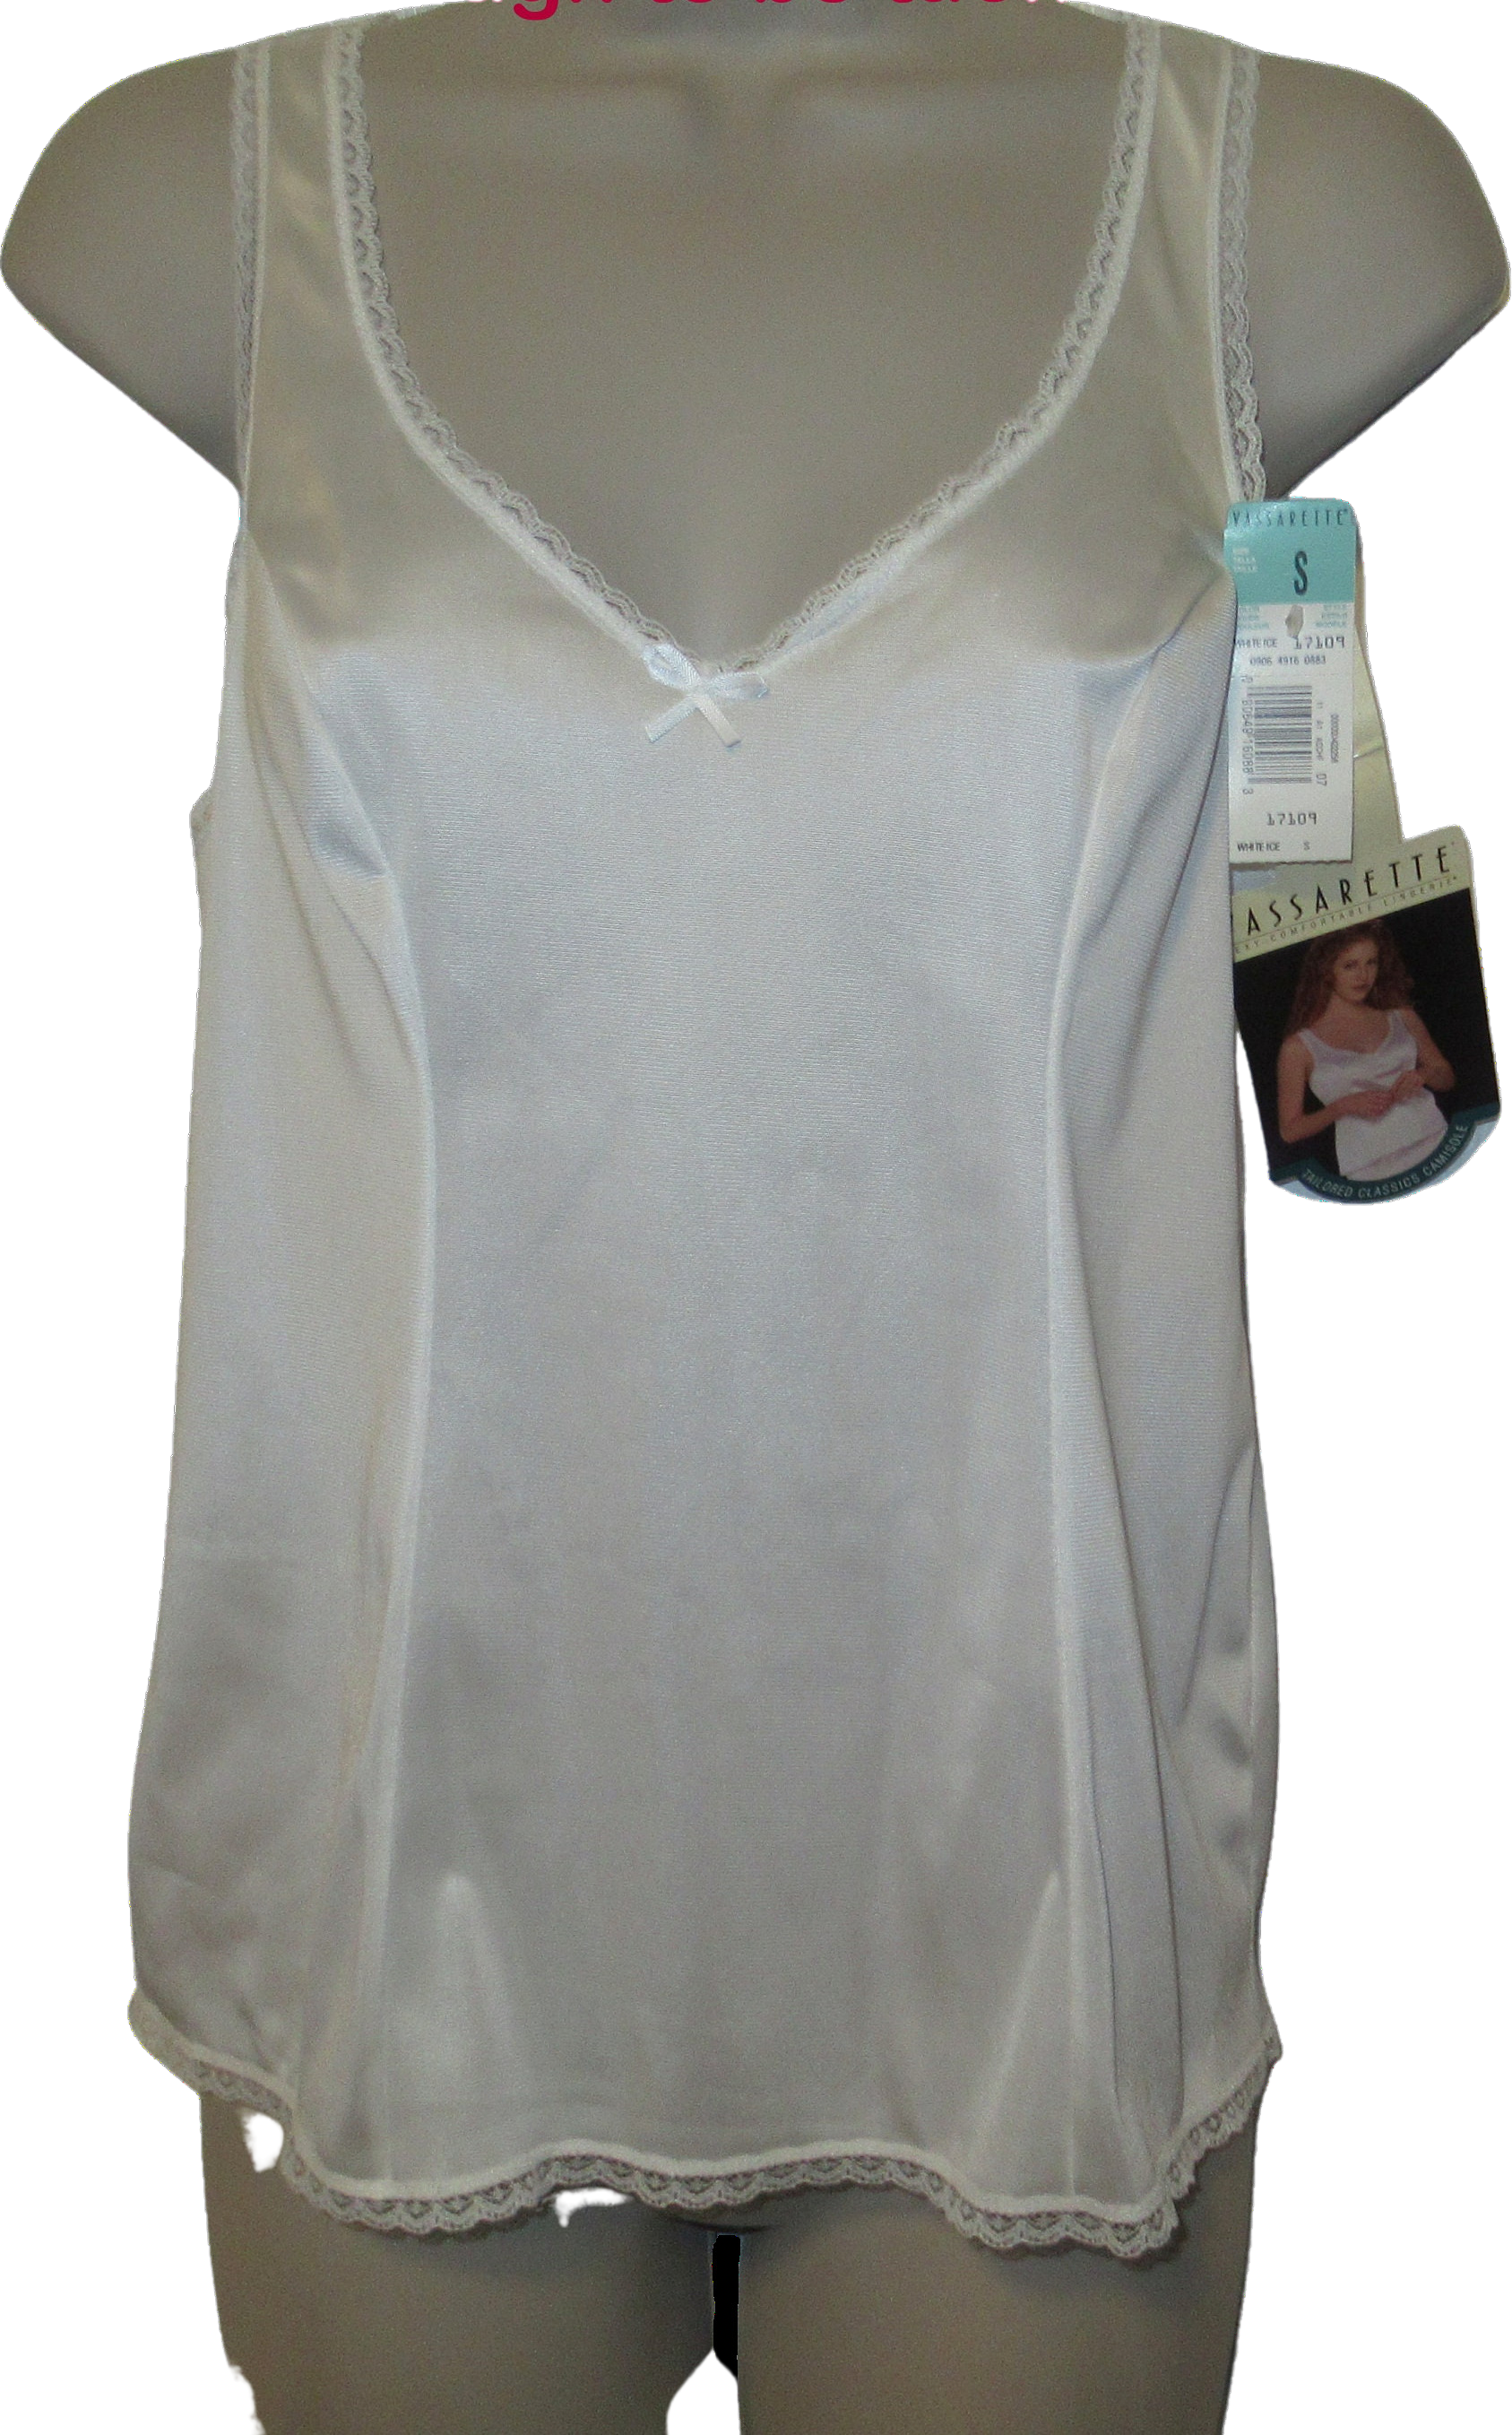 Vintage Vassarette Camisole Bright White Nylon Lace Trim S Attached Style  Is C